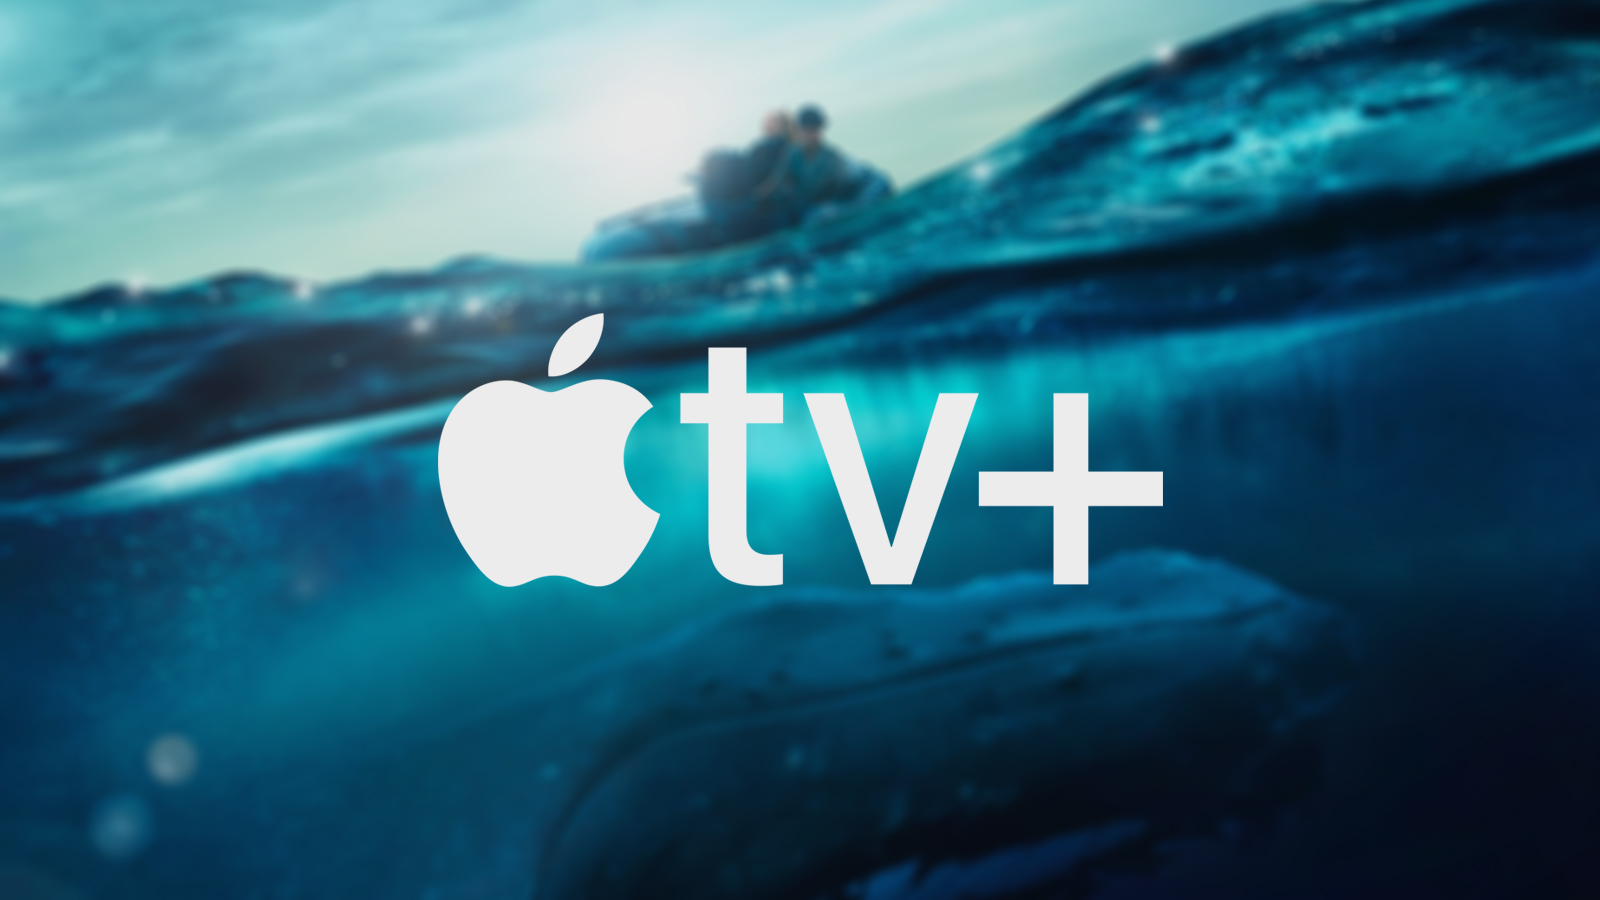 Apple TV + 18 أكتوبر 2021 0 تعقيب
Apple تلفزيون + يكشف تفاصيل عن مسلسل خيال علمي صوف